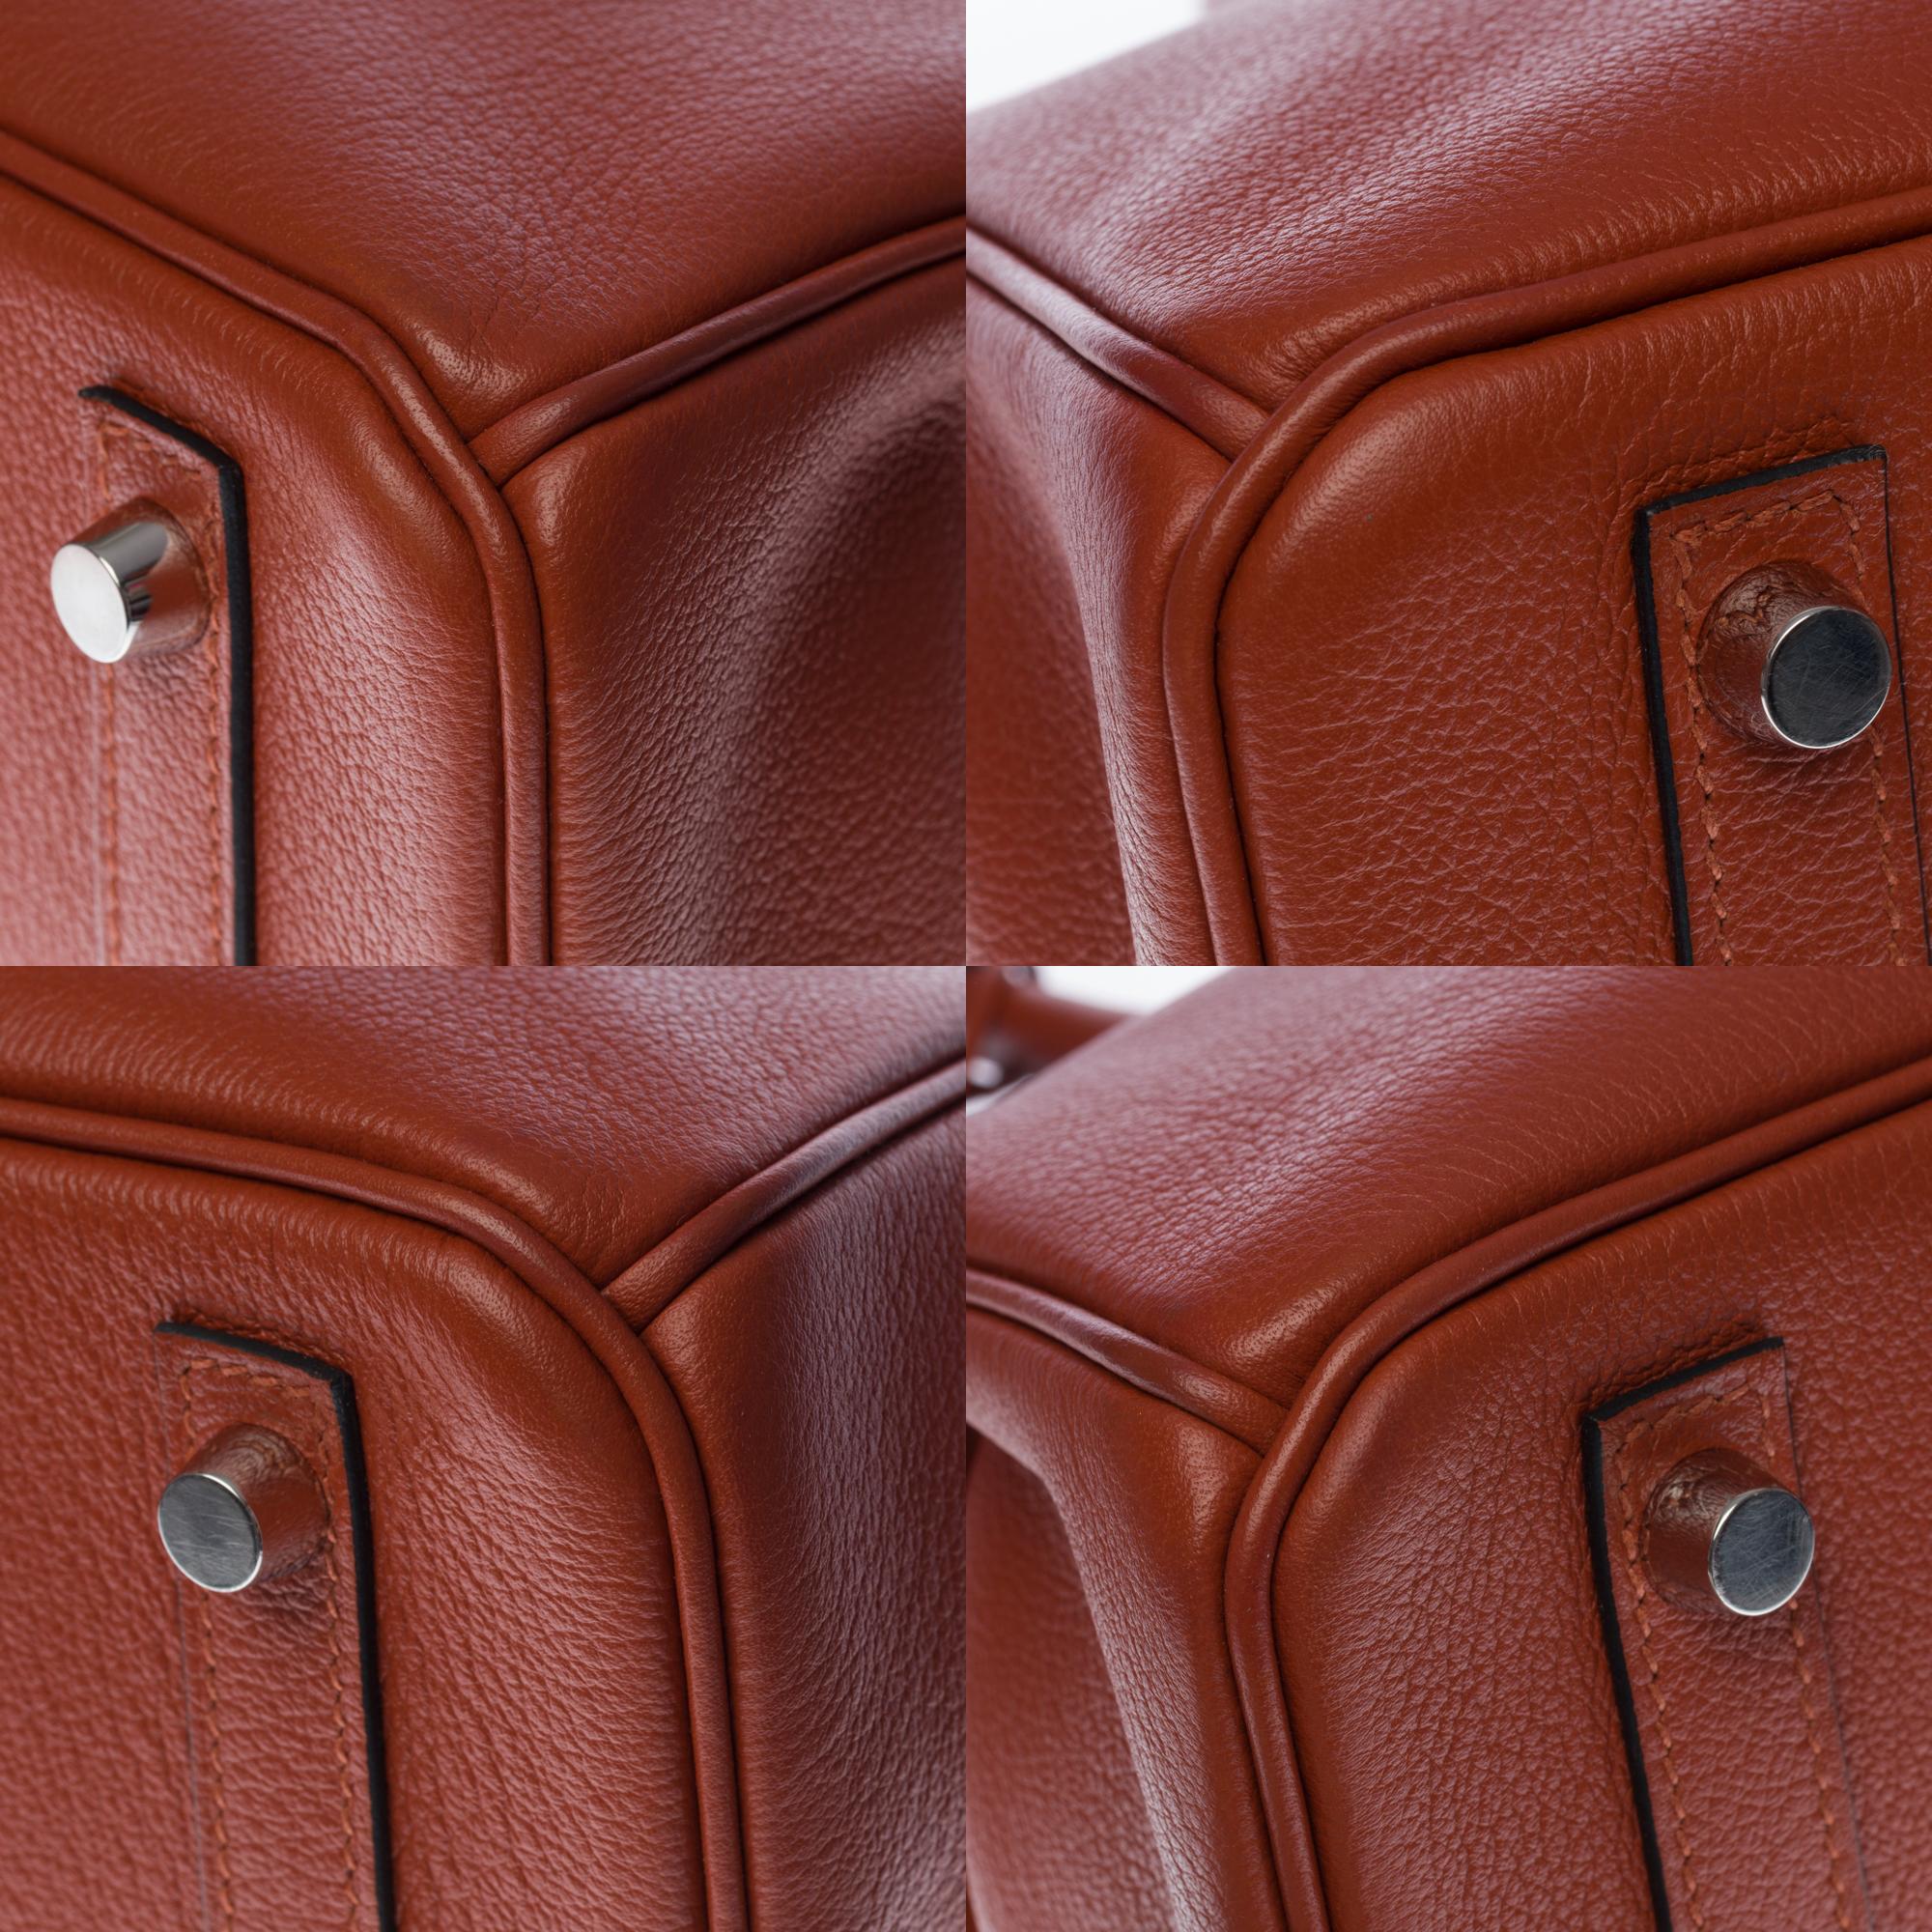 Stunning Hermès Birkin 30 handbag in Cuivre/Copper Mysore Goat leather, SHW 2